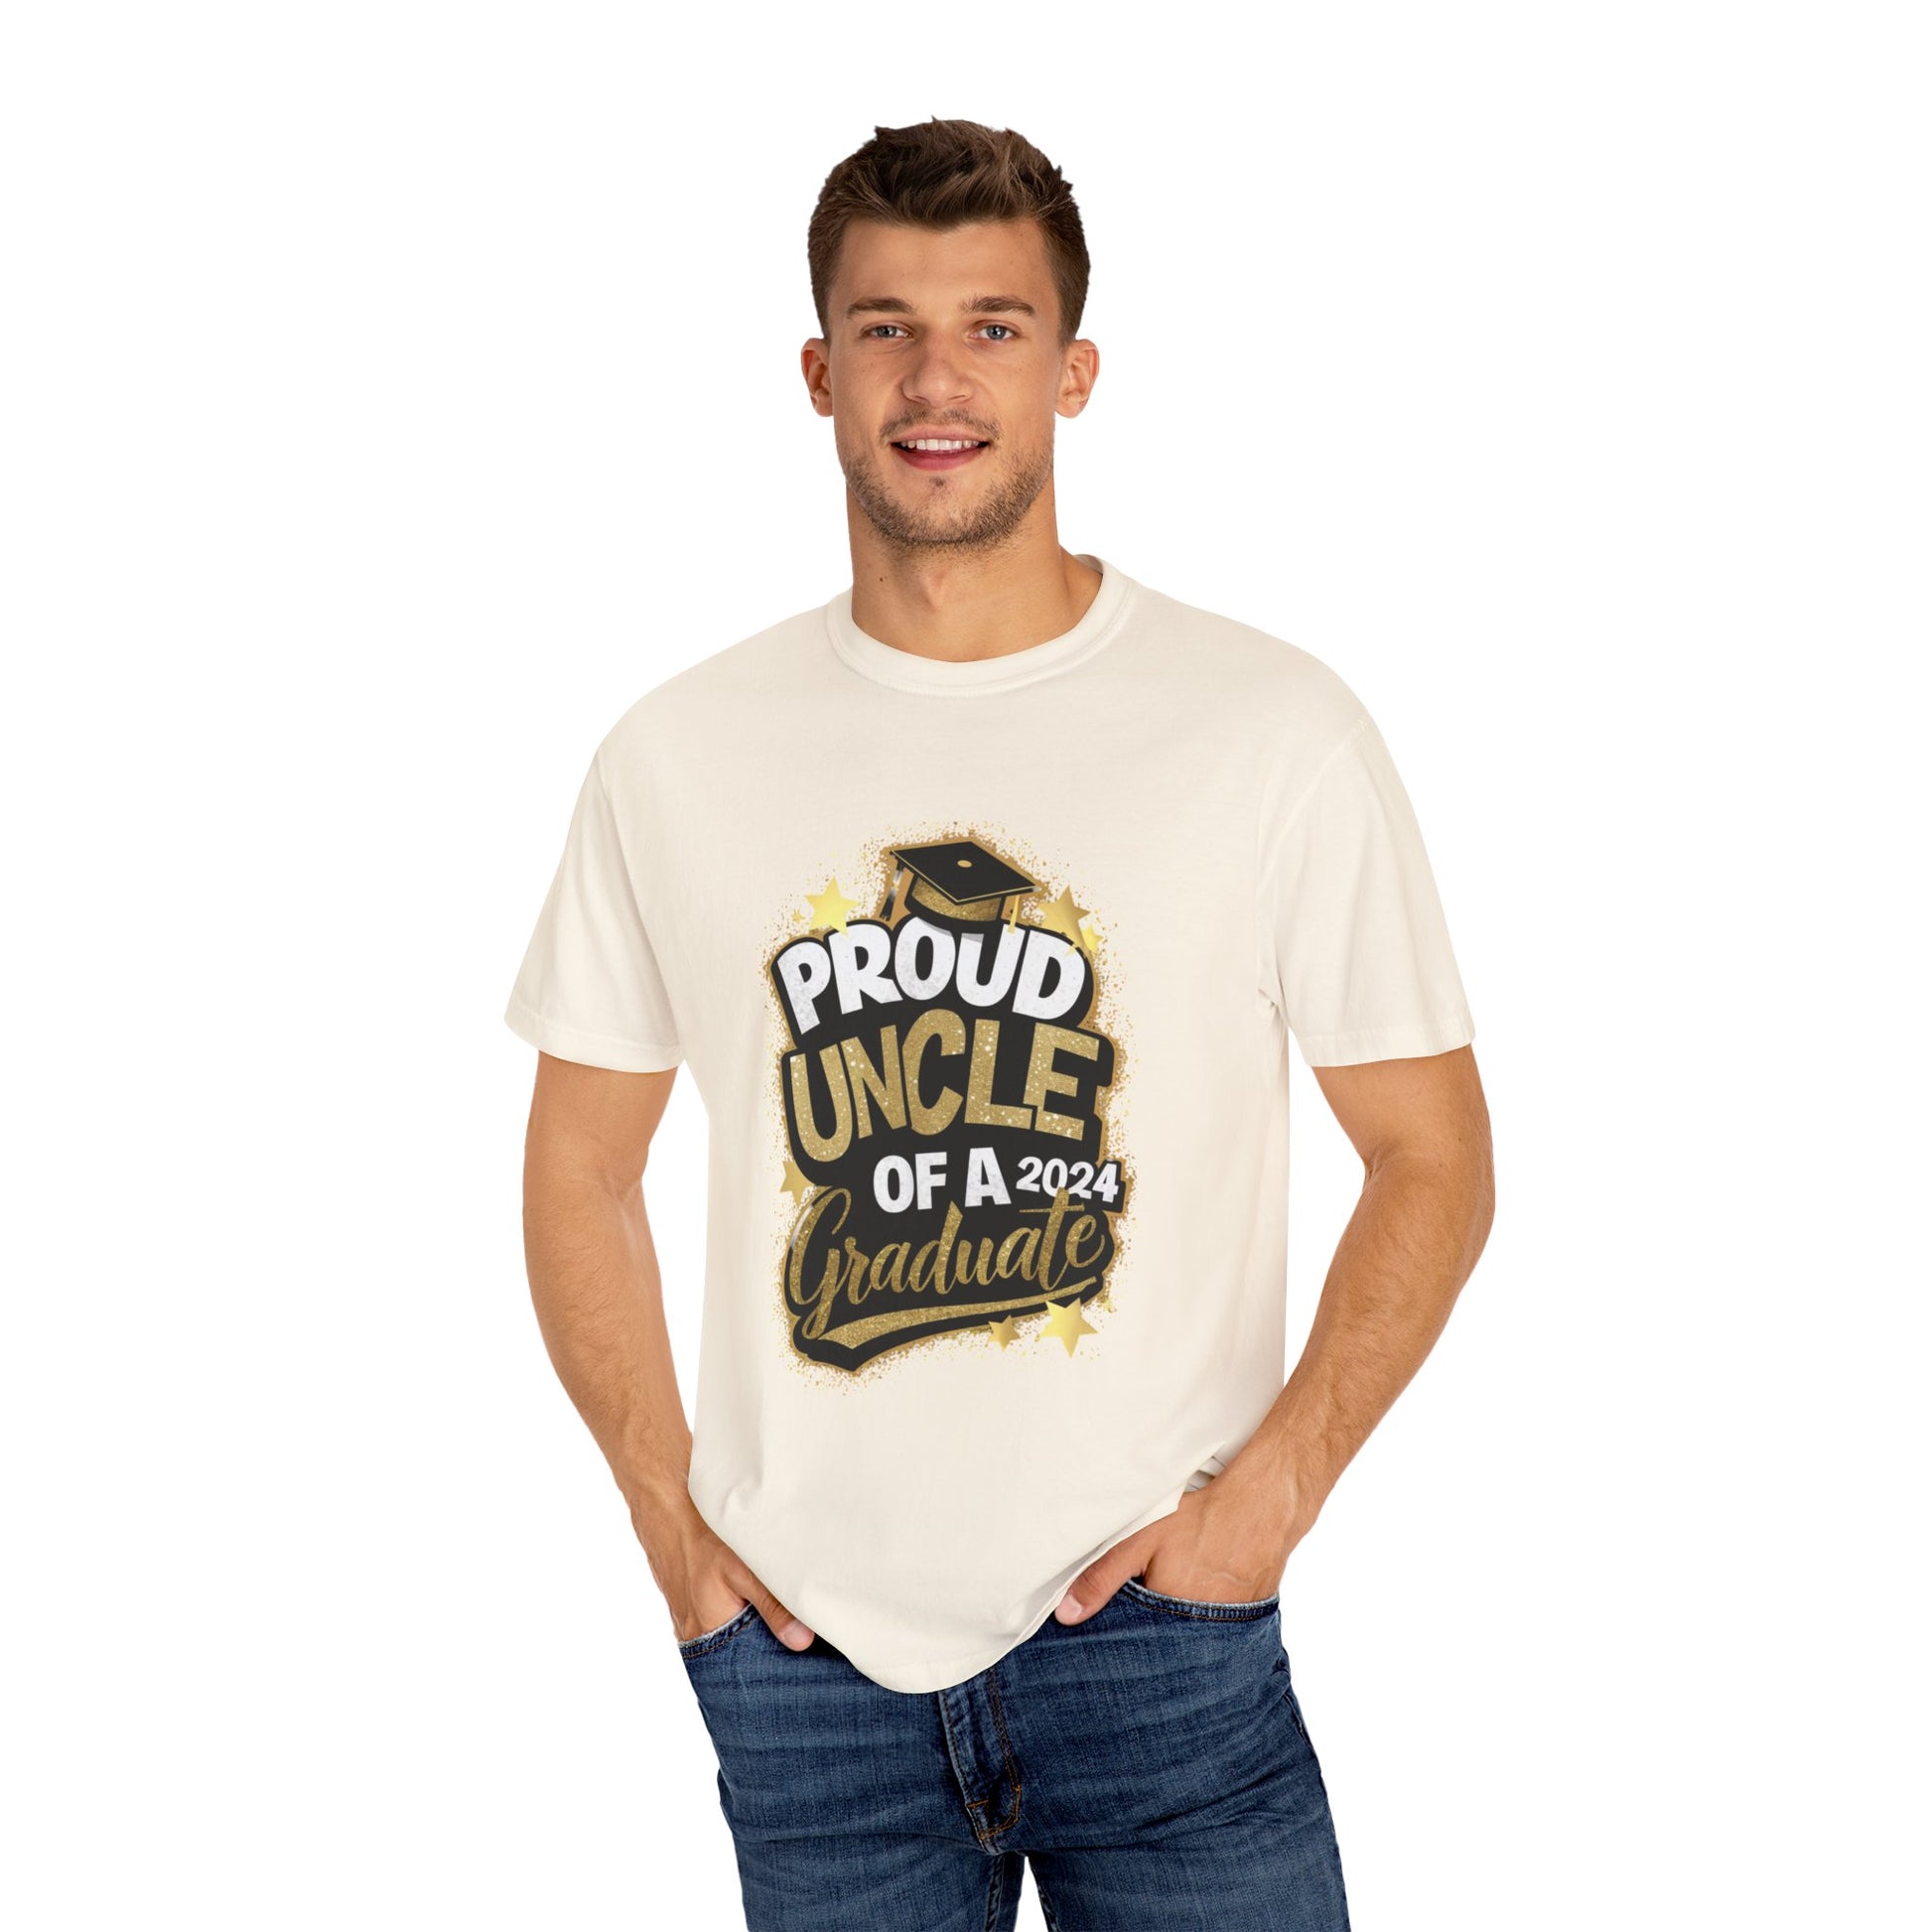 Proud Uncle of a 2024 Graduate Unisex Garment-dyed T-shirt Cotton Funny Humorous Graphic Soft Premium Unisex Men Women Ivory T-shirt Birthday Gift-45